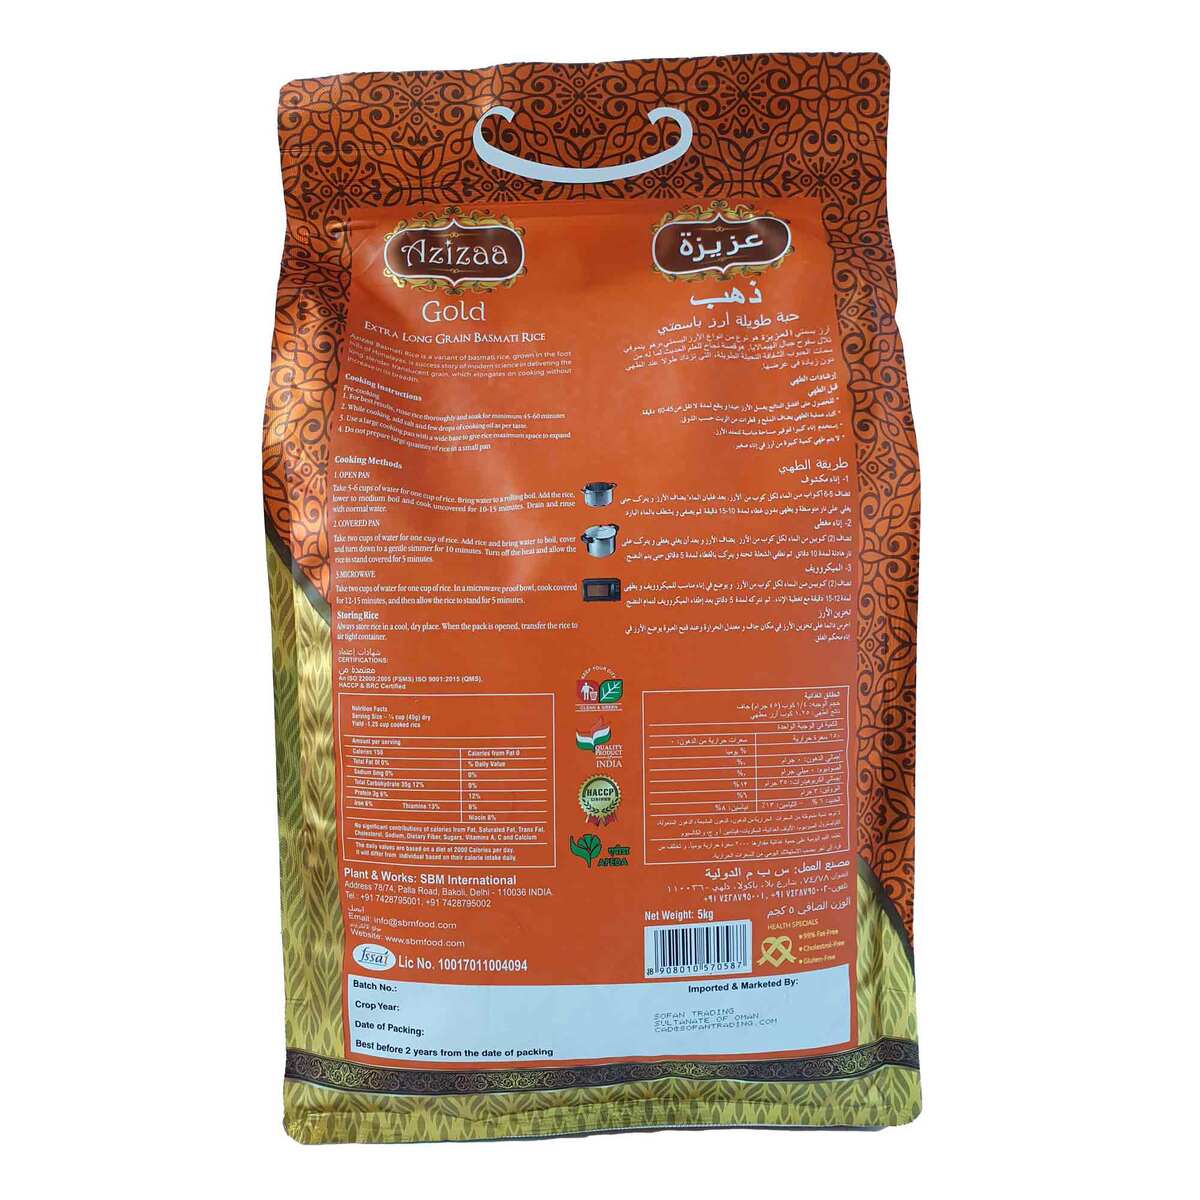 Azizaa  Basmati Rice Gold Value Pack 5kg